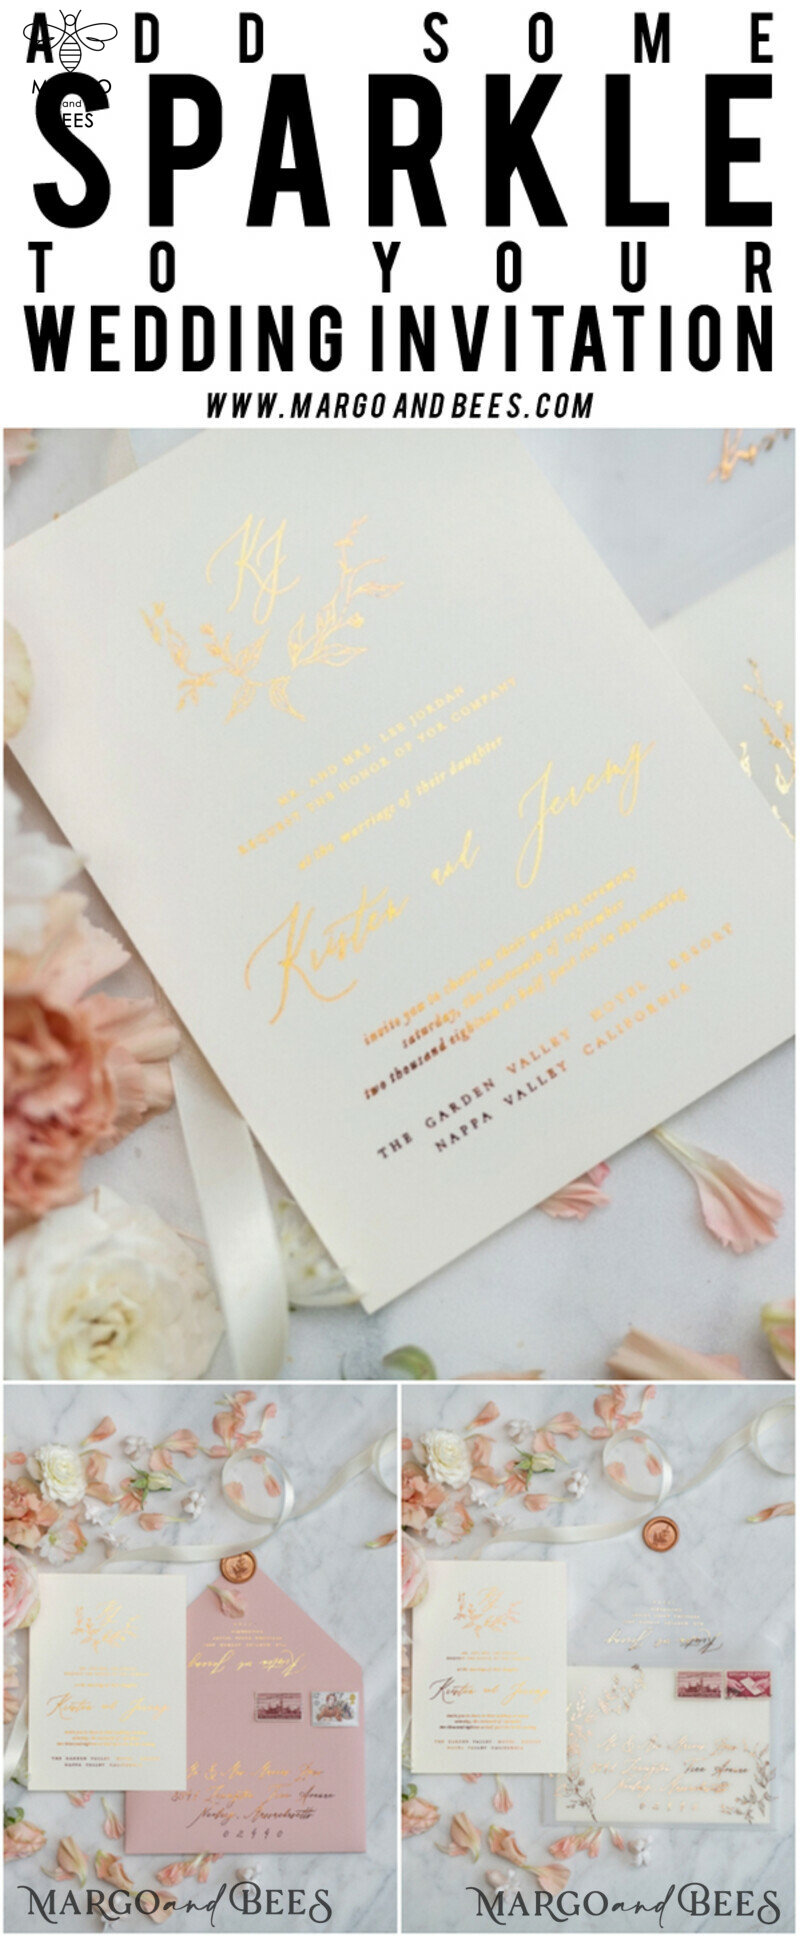 Bespoke Vellum Wedding Invitation Suite: Romantic Blush Pink and Glamour Gold Foil for an Elegant Golden Wedding-41